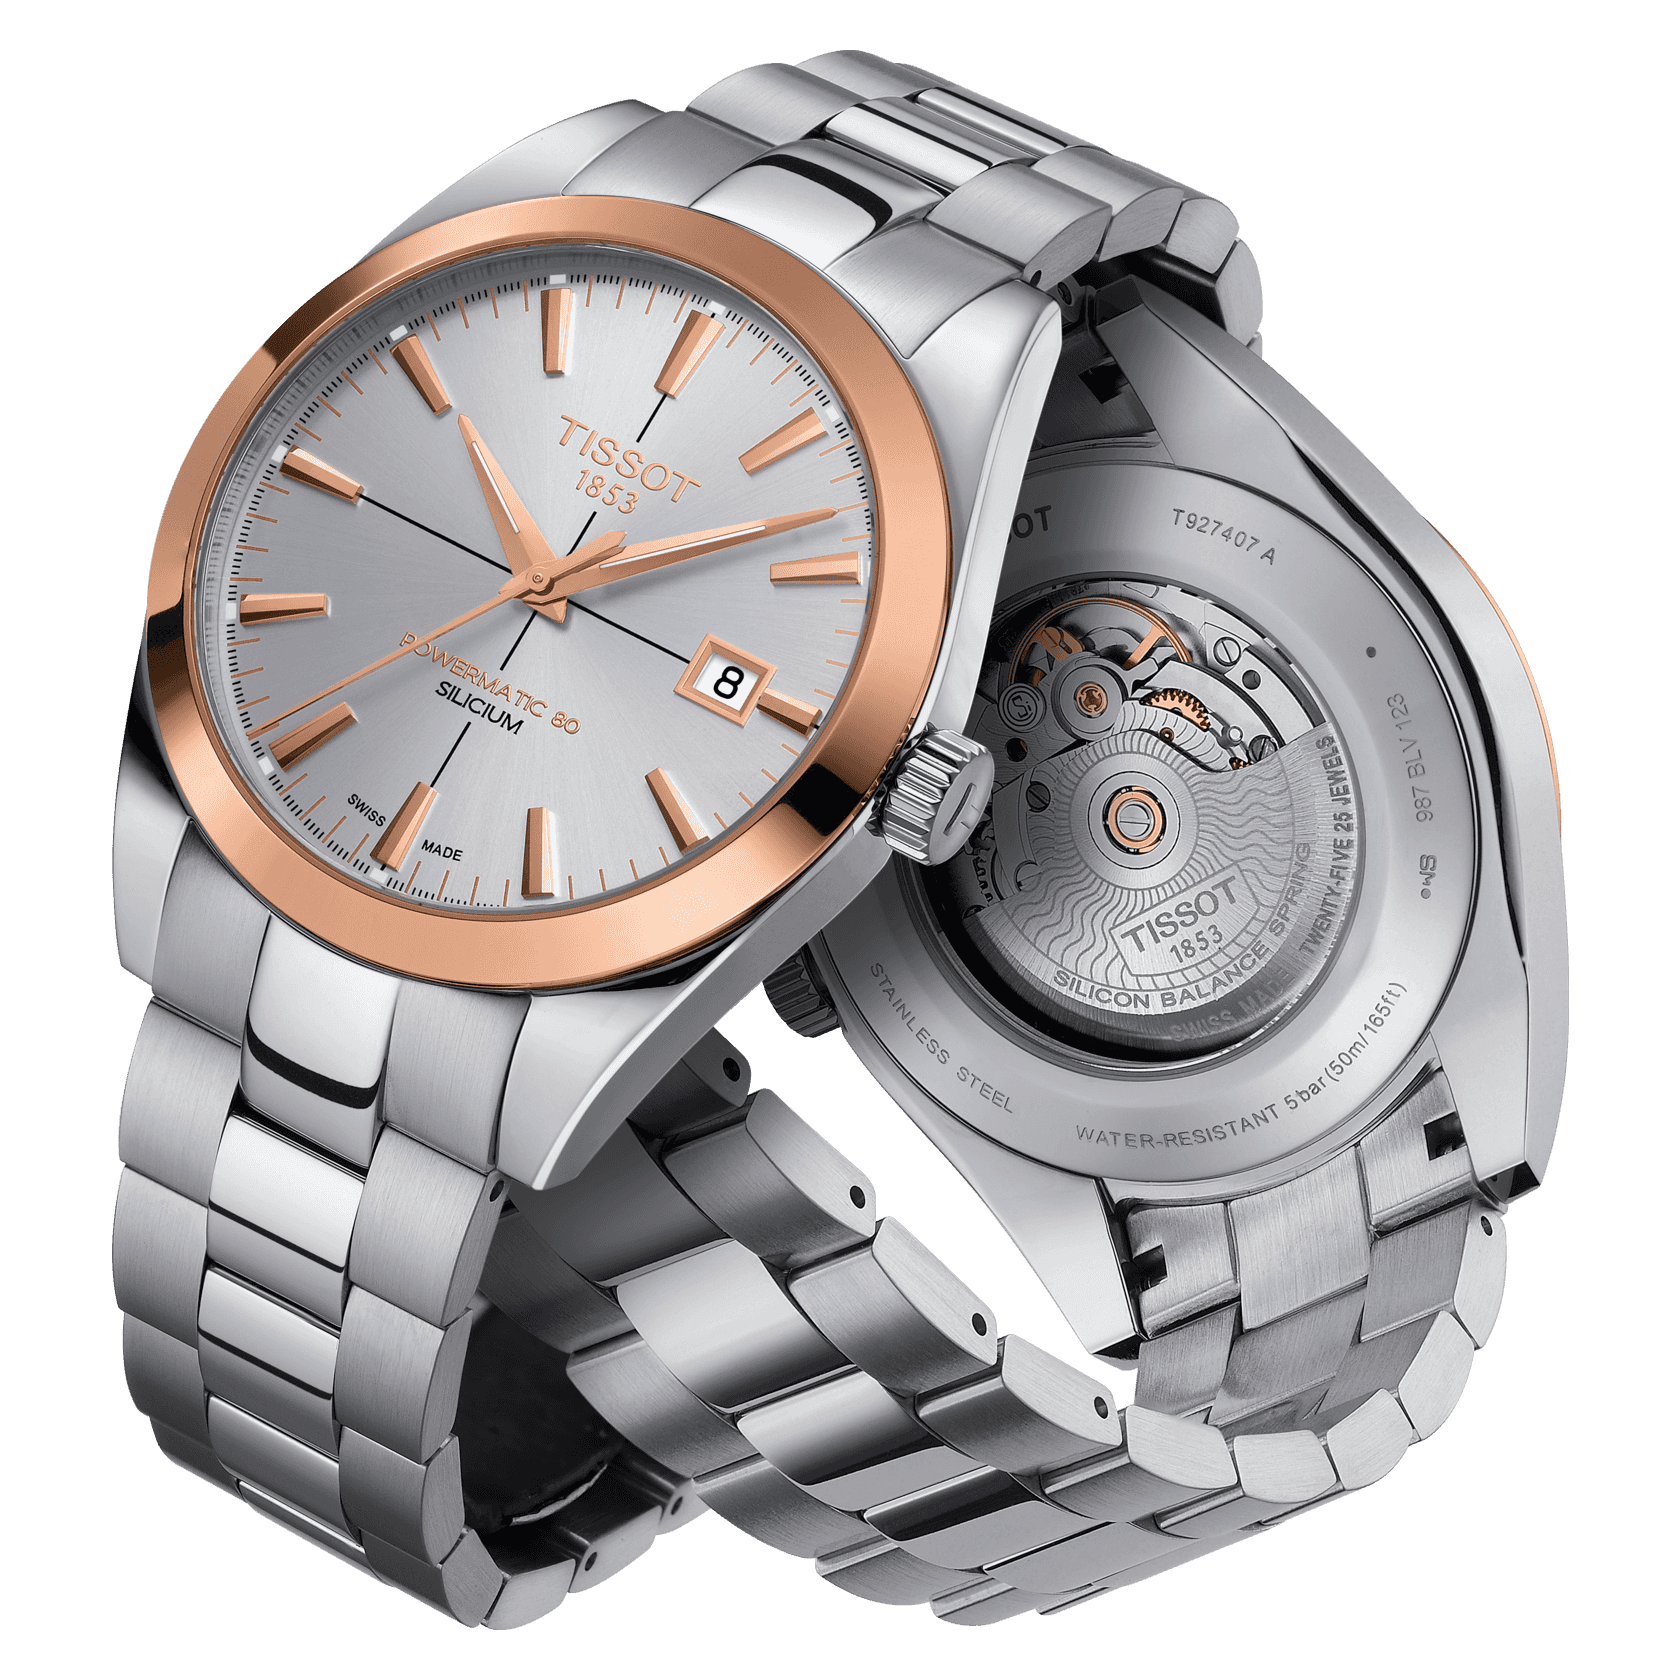 Dhgate Replica Watches Price